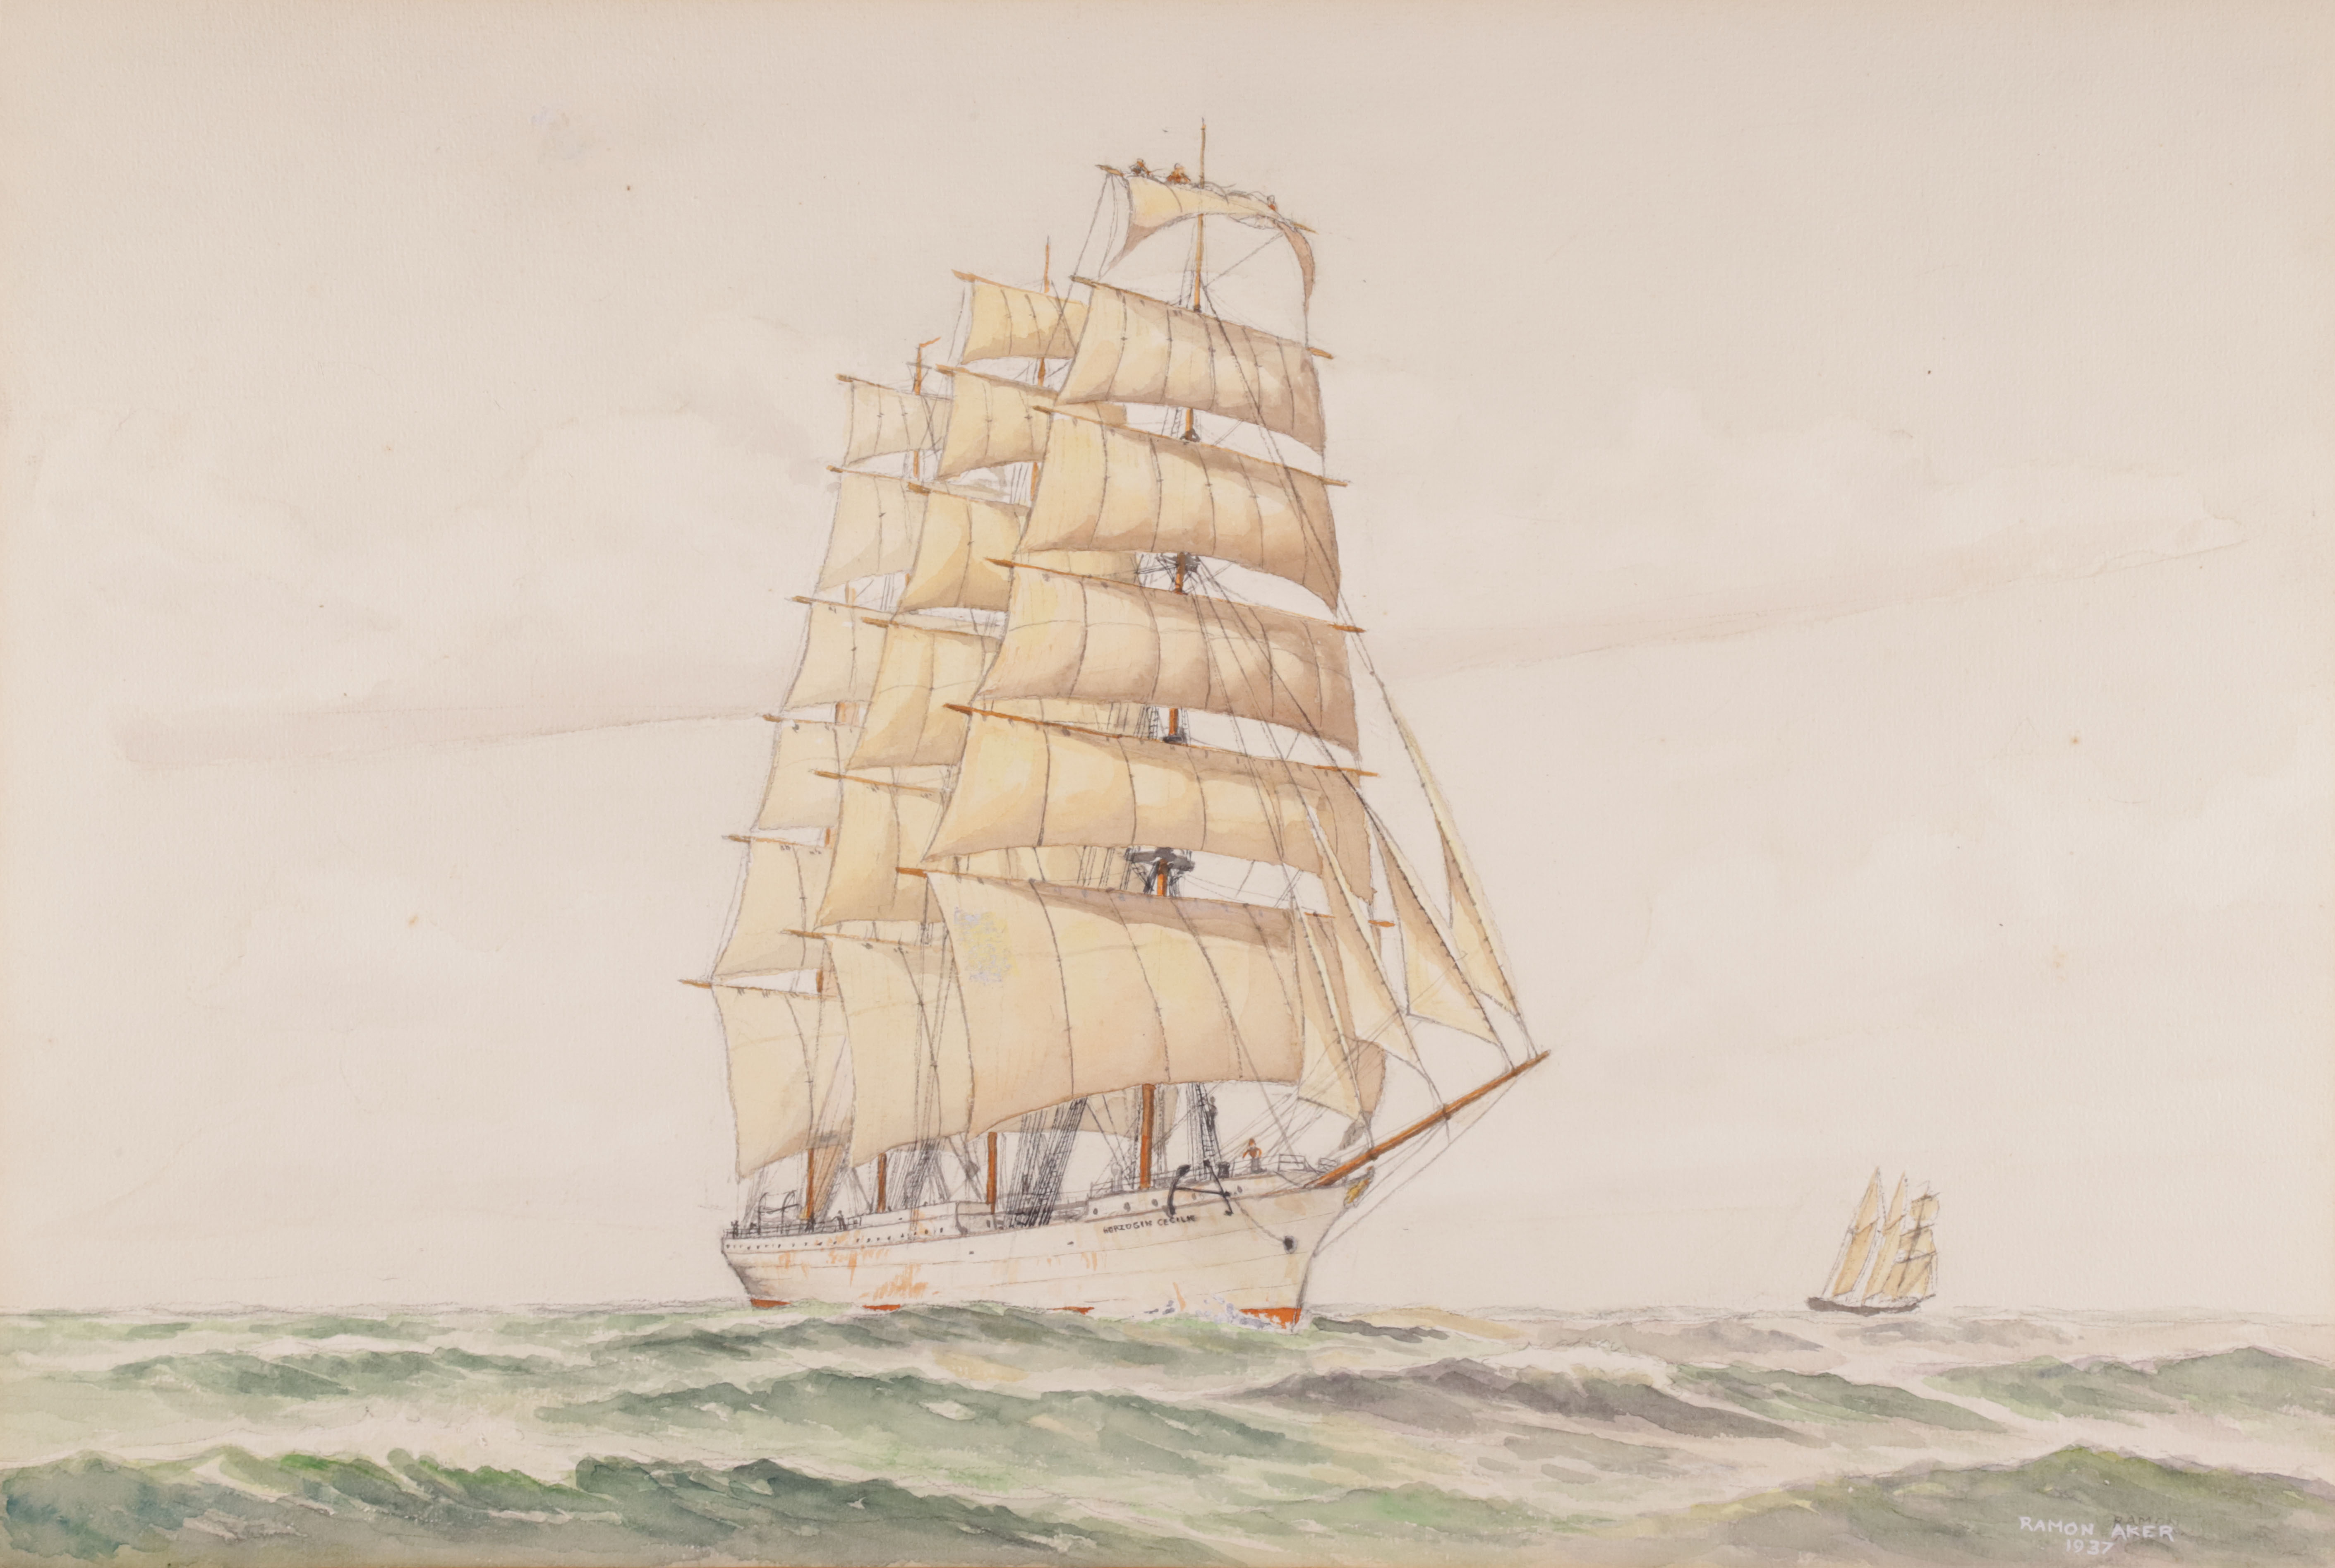 Ramon Aker Watercolor “Portrait of the Ship Hezogin Cecilie 1902-1936”